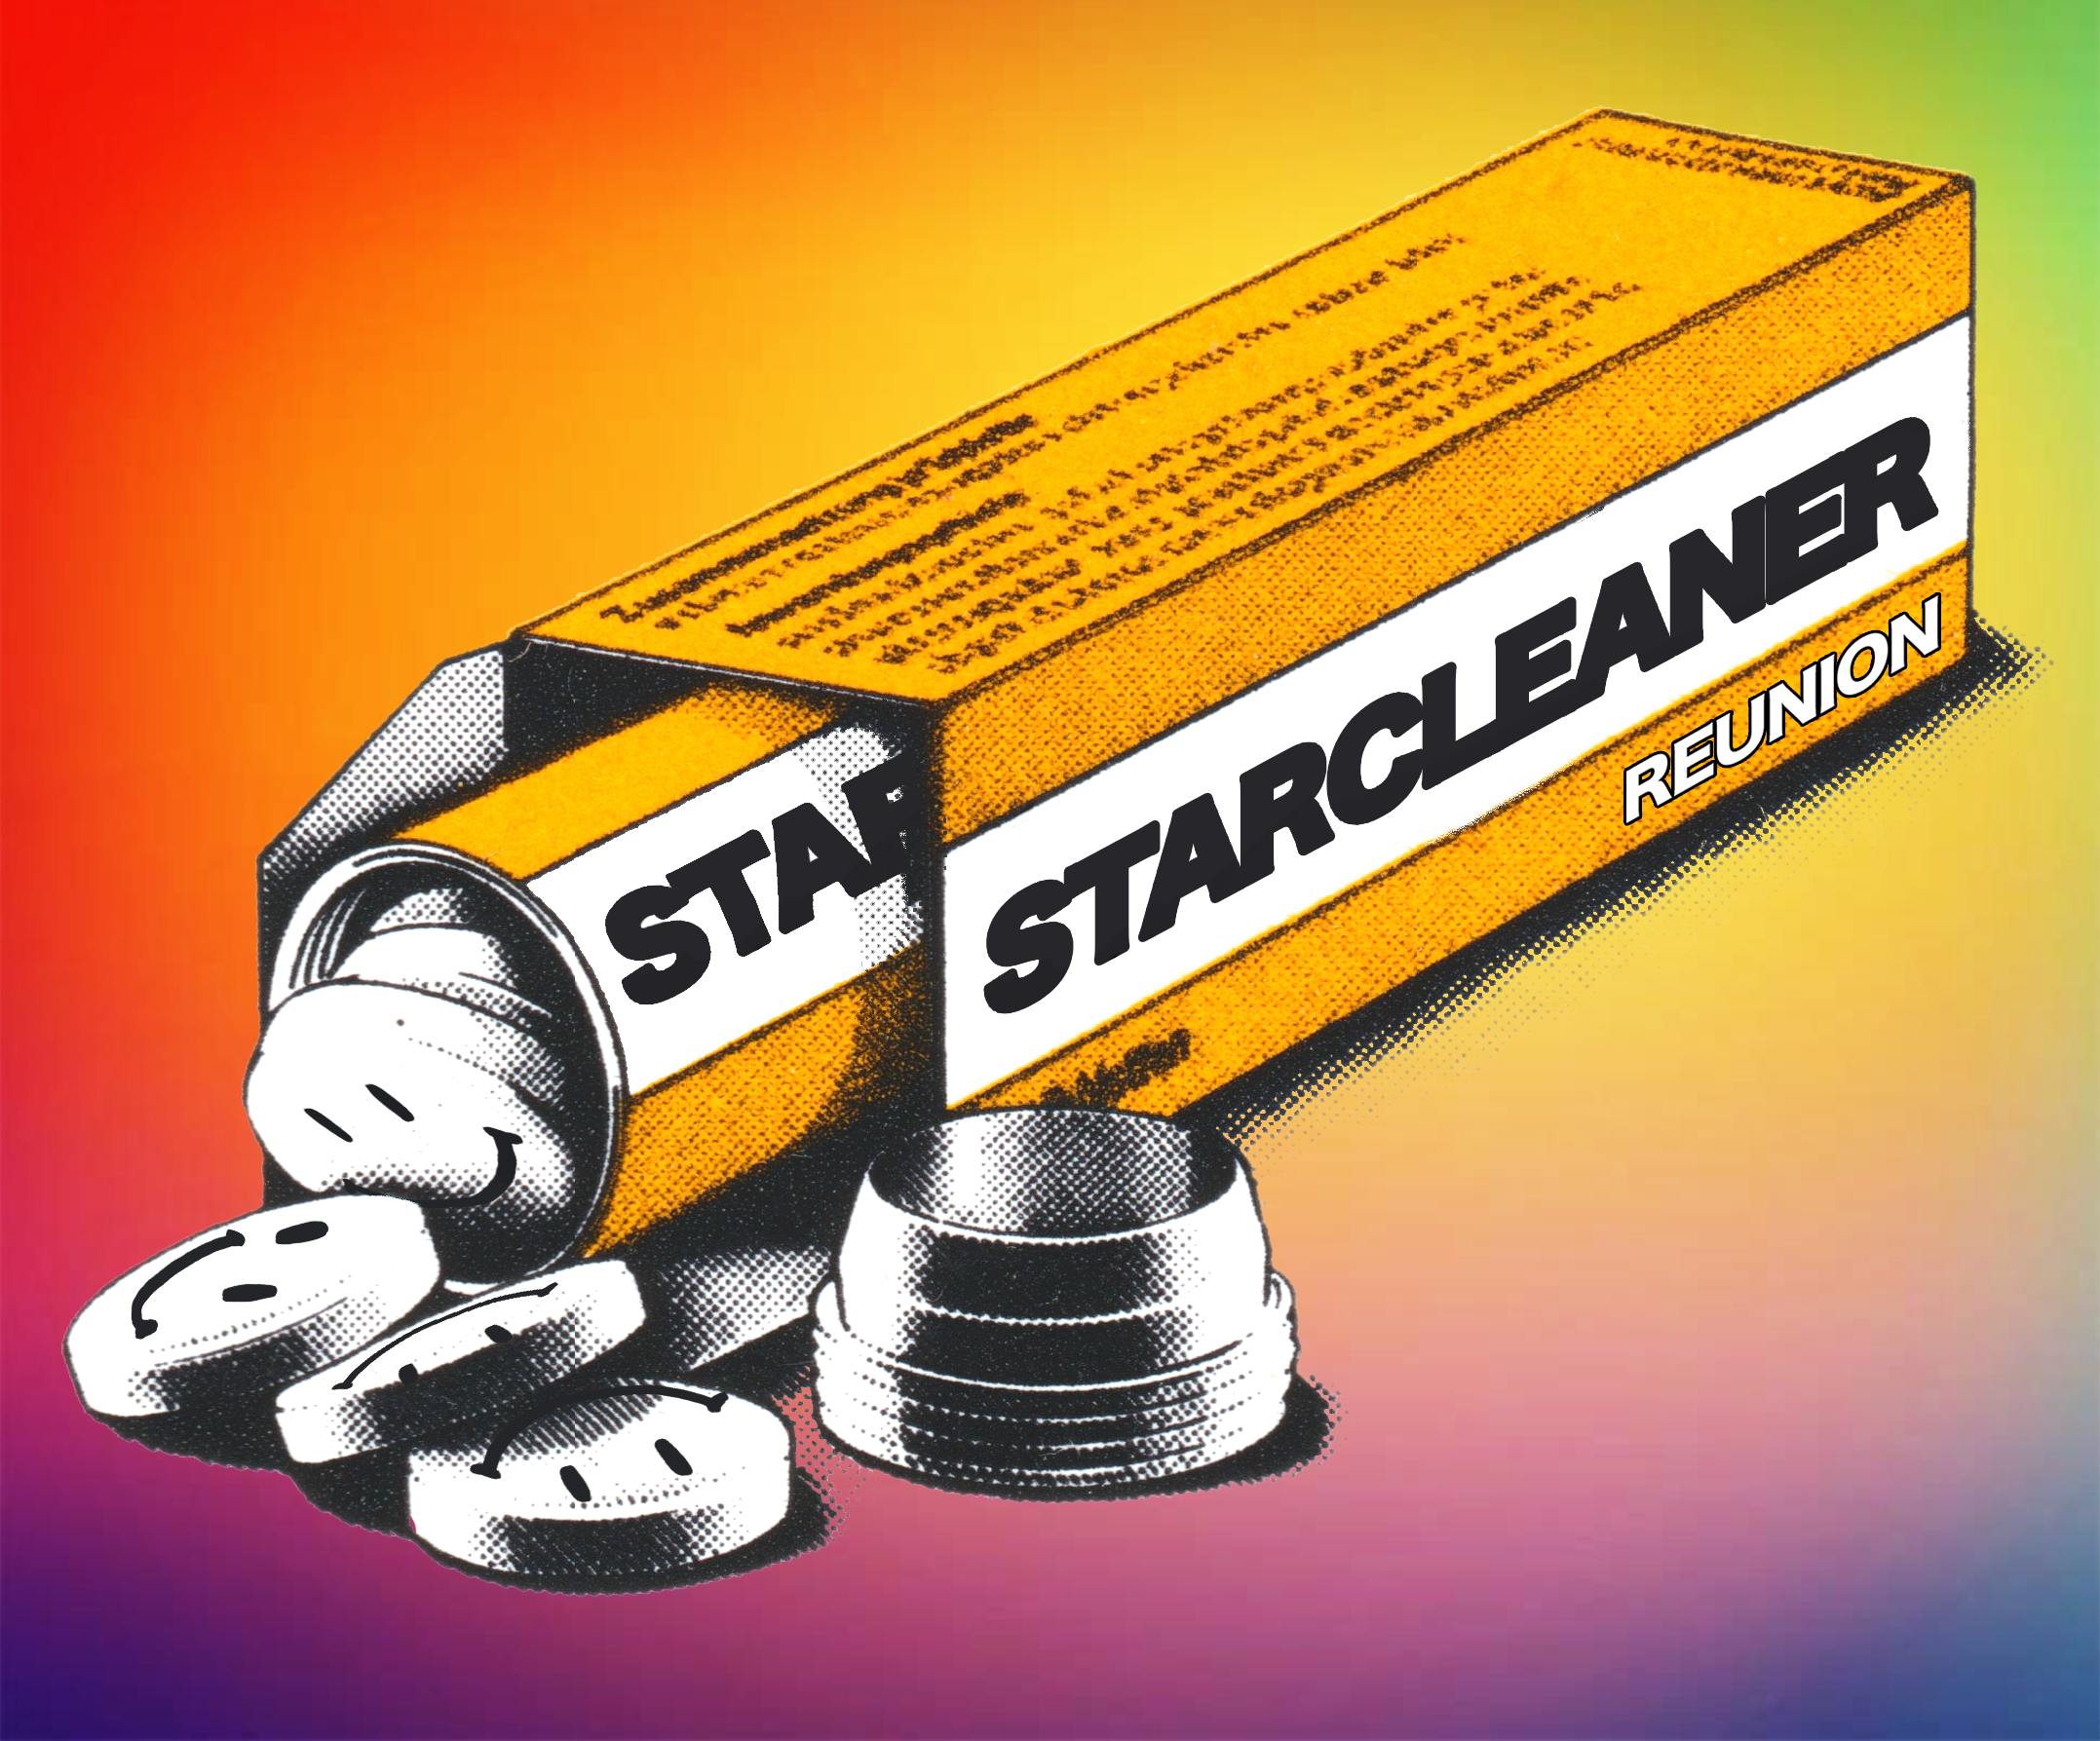 Starcleaner "Pill Box"